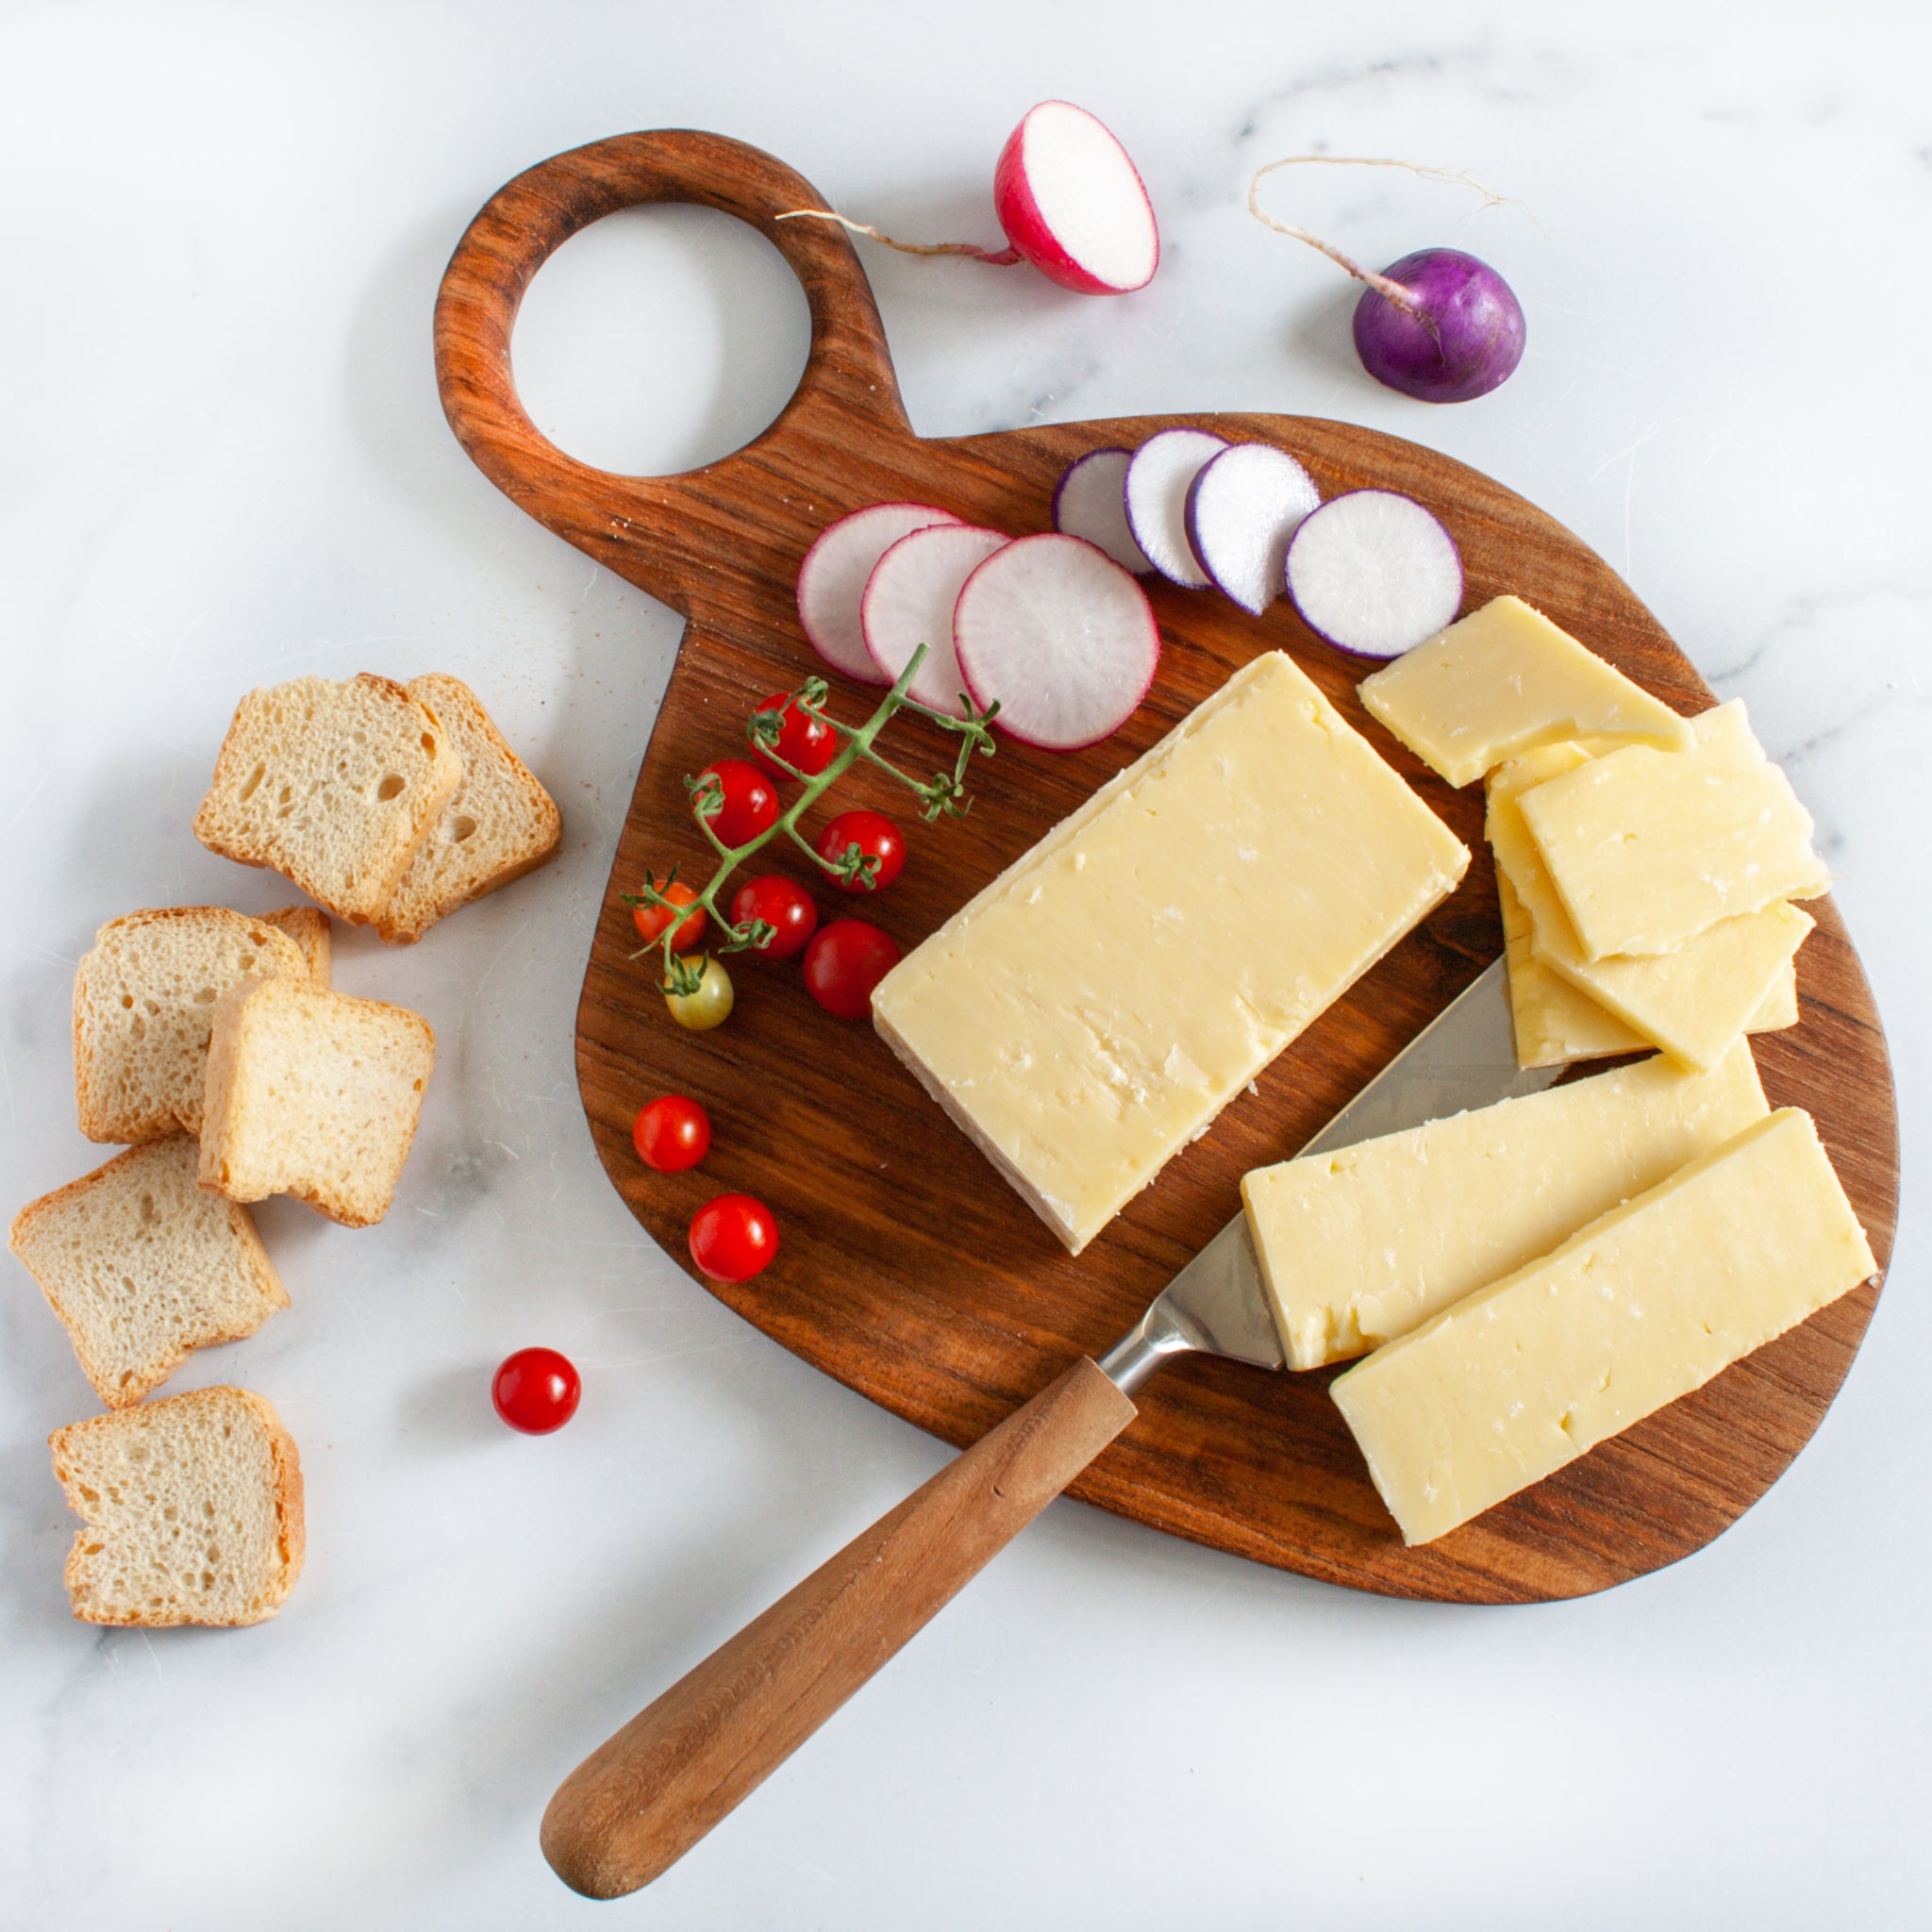 Collier's Cheddar Cheese - igourmet